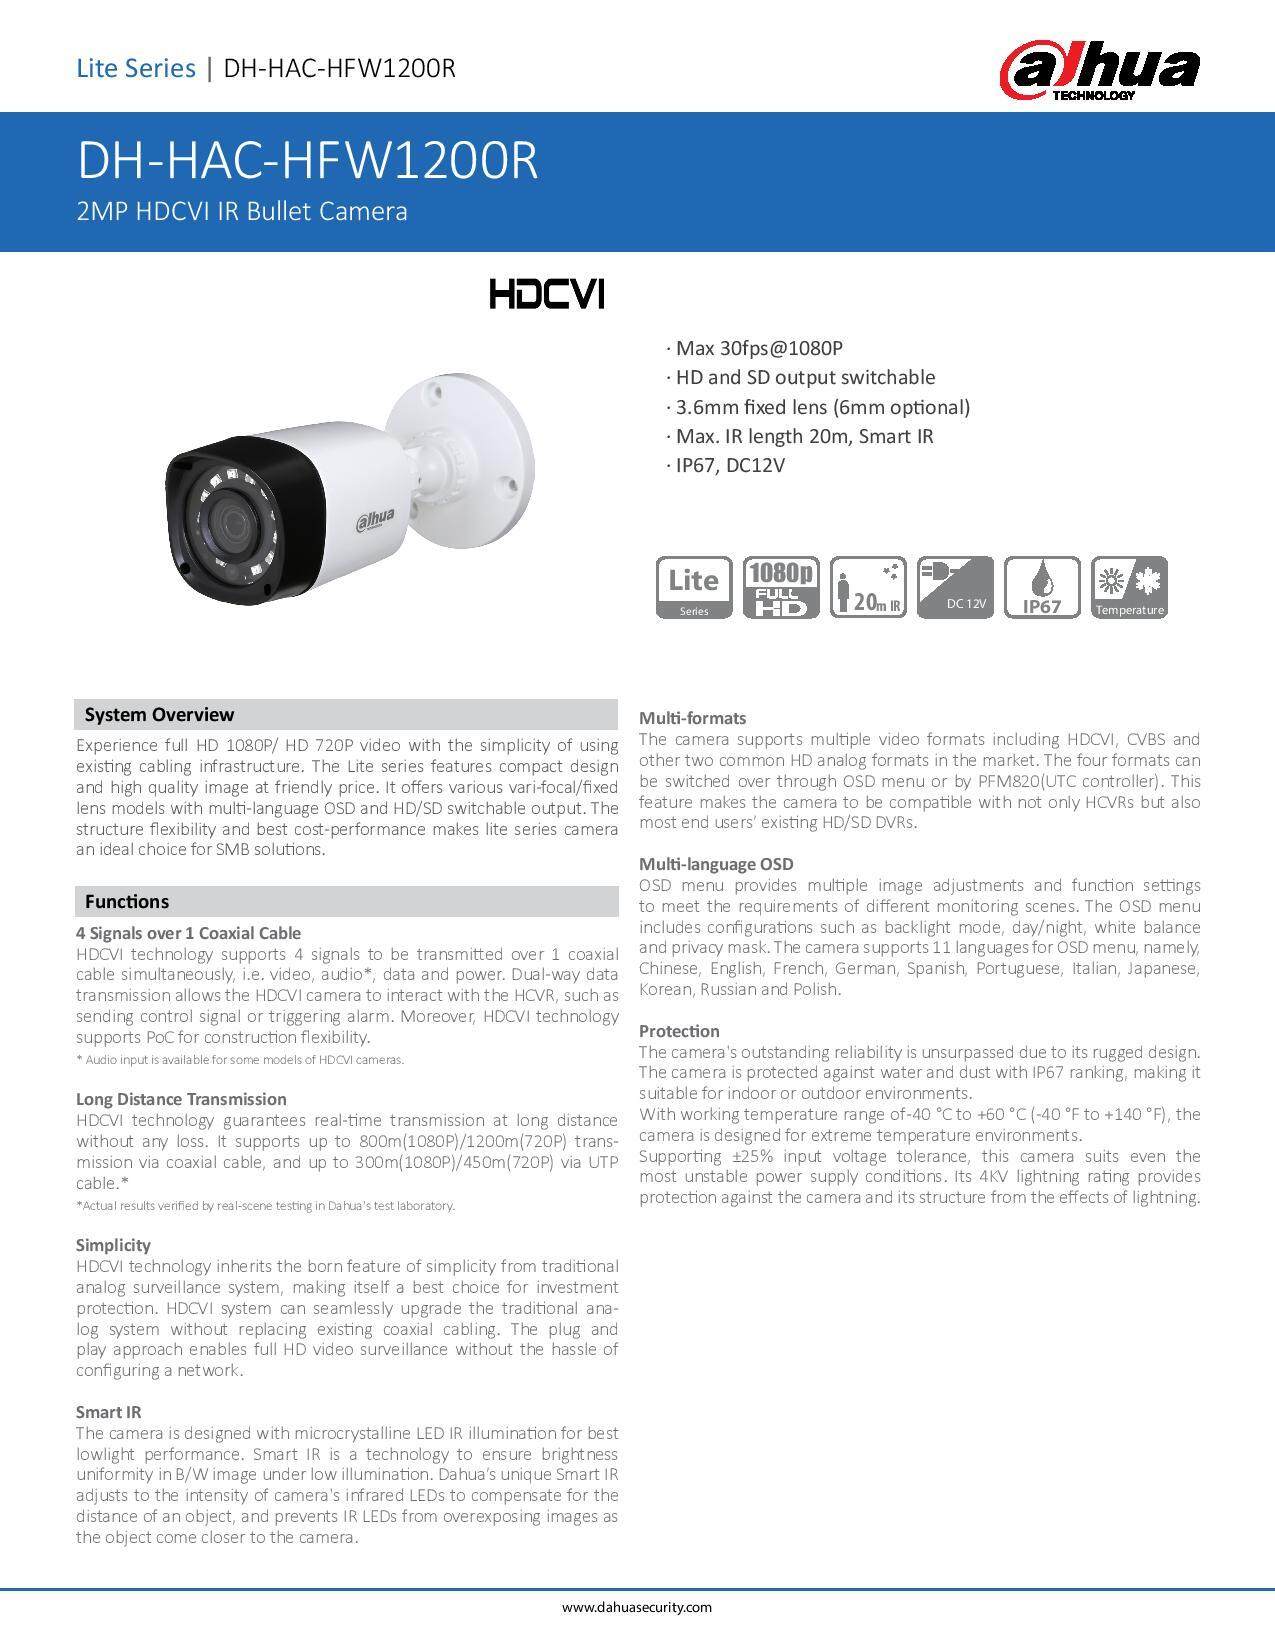 DH-HAC-HFW1200R_Datasheet_20170703-page-001.jpg